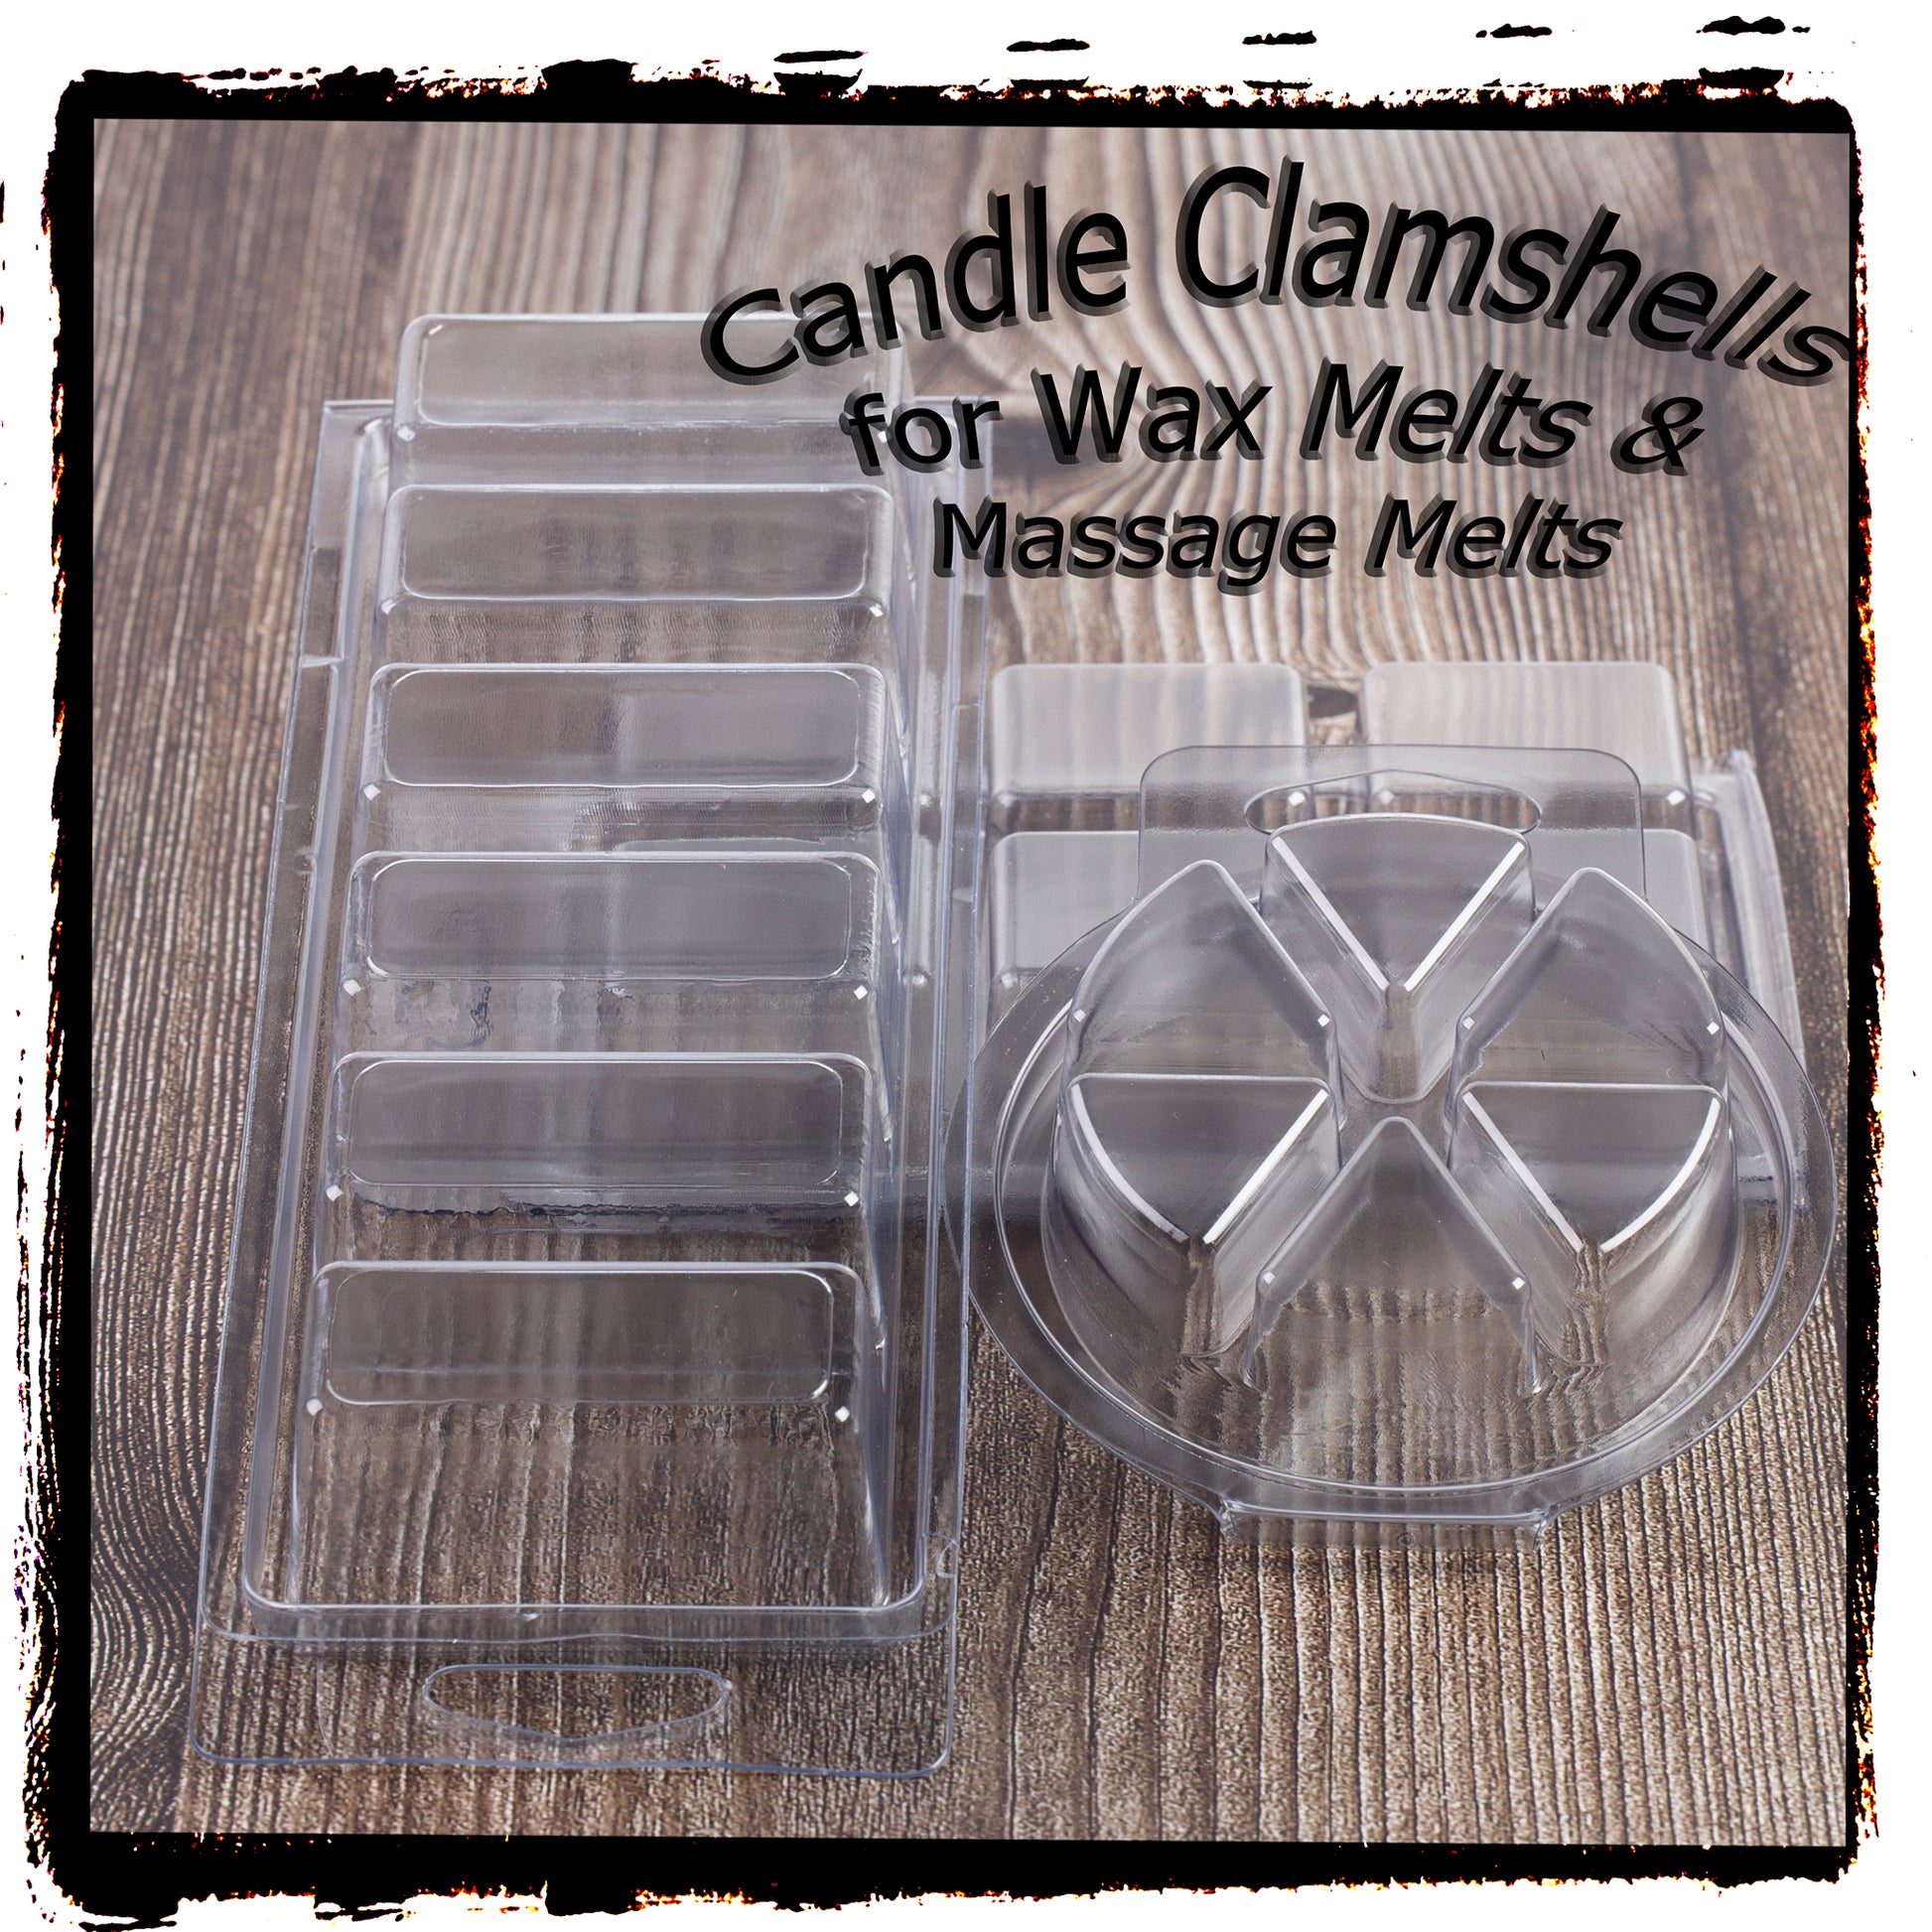 Clamshells - 6 Cavity